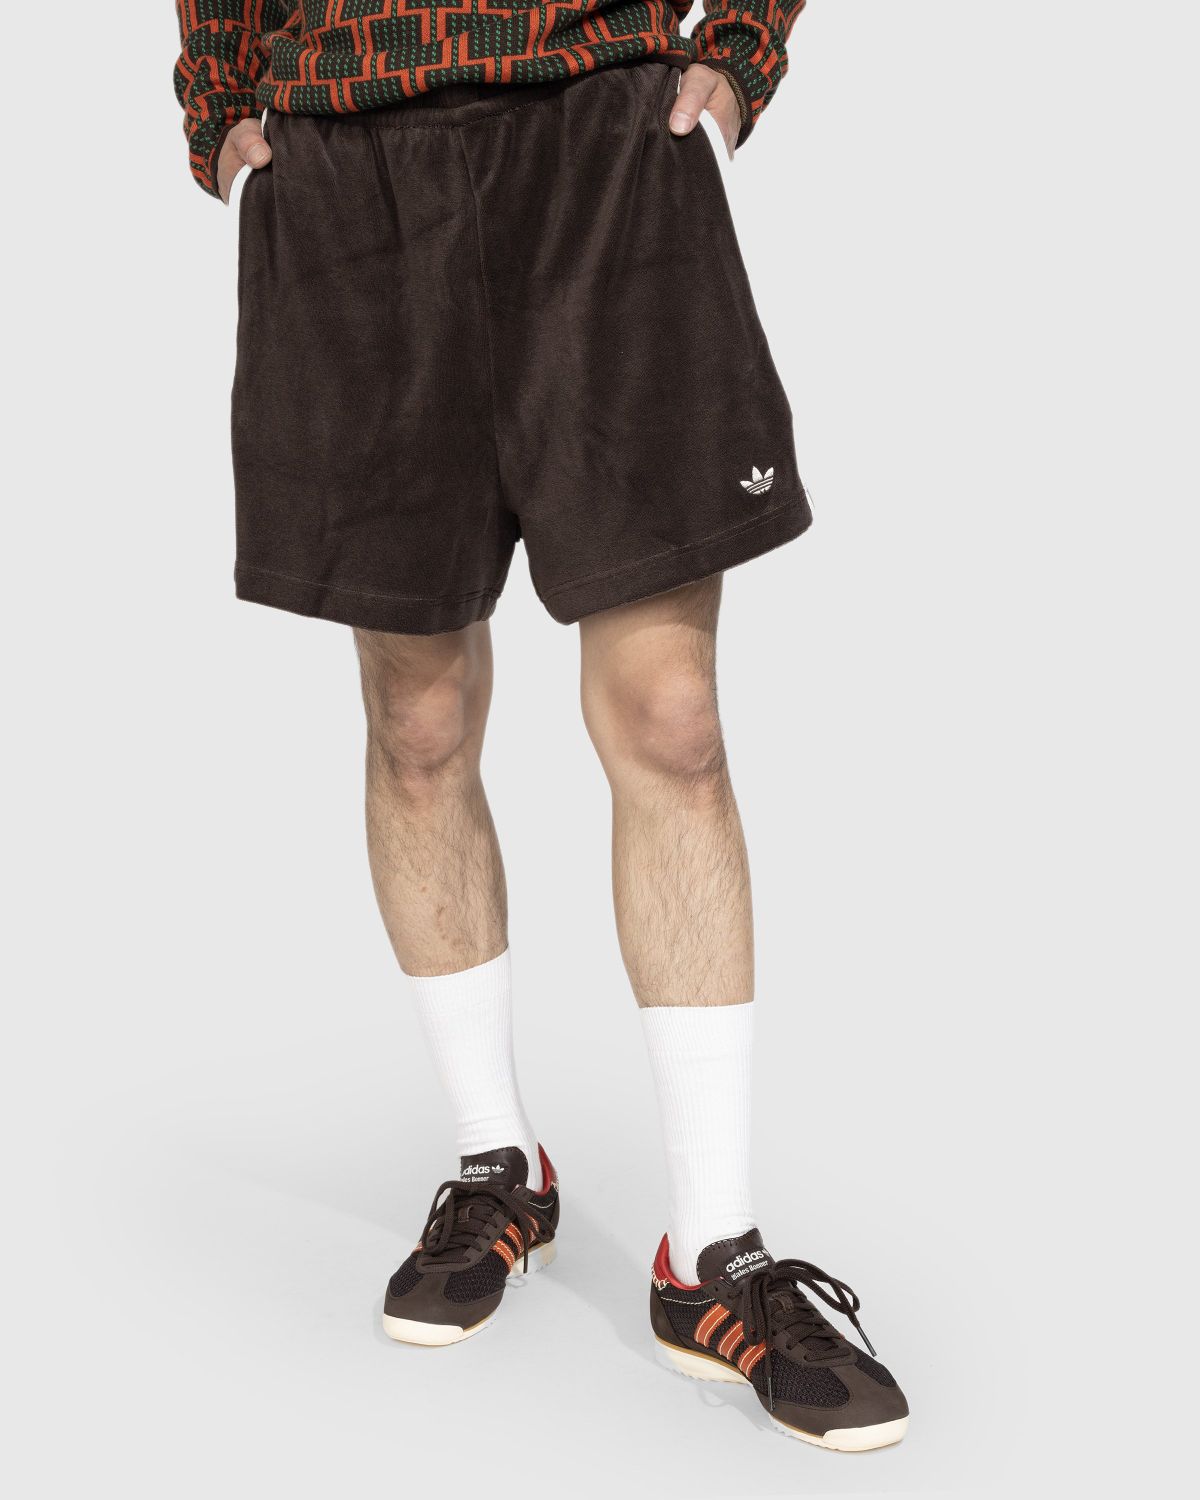 Adidas x Wales Bonner – Cotton Blend Shorts Dark Brown